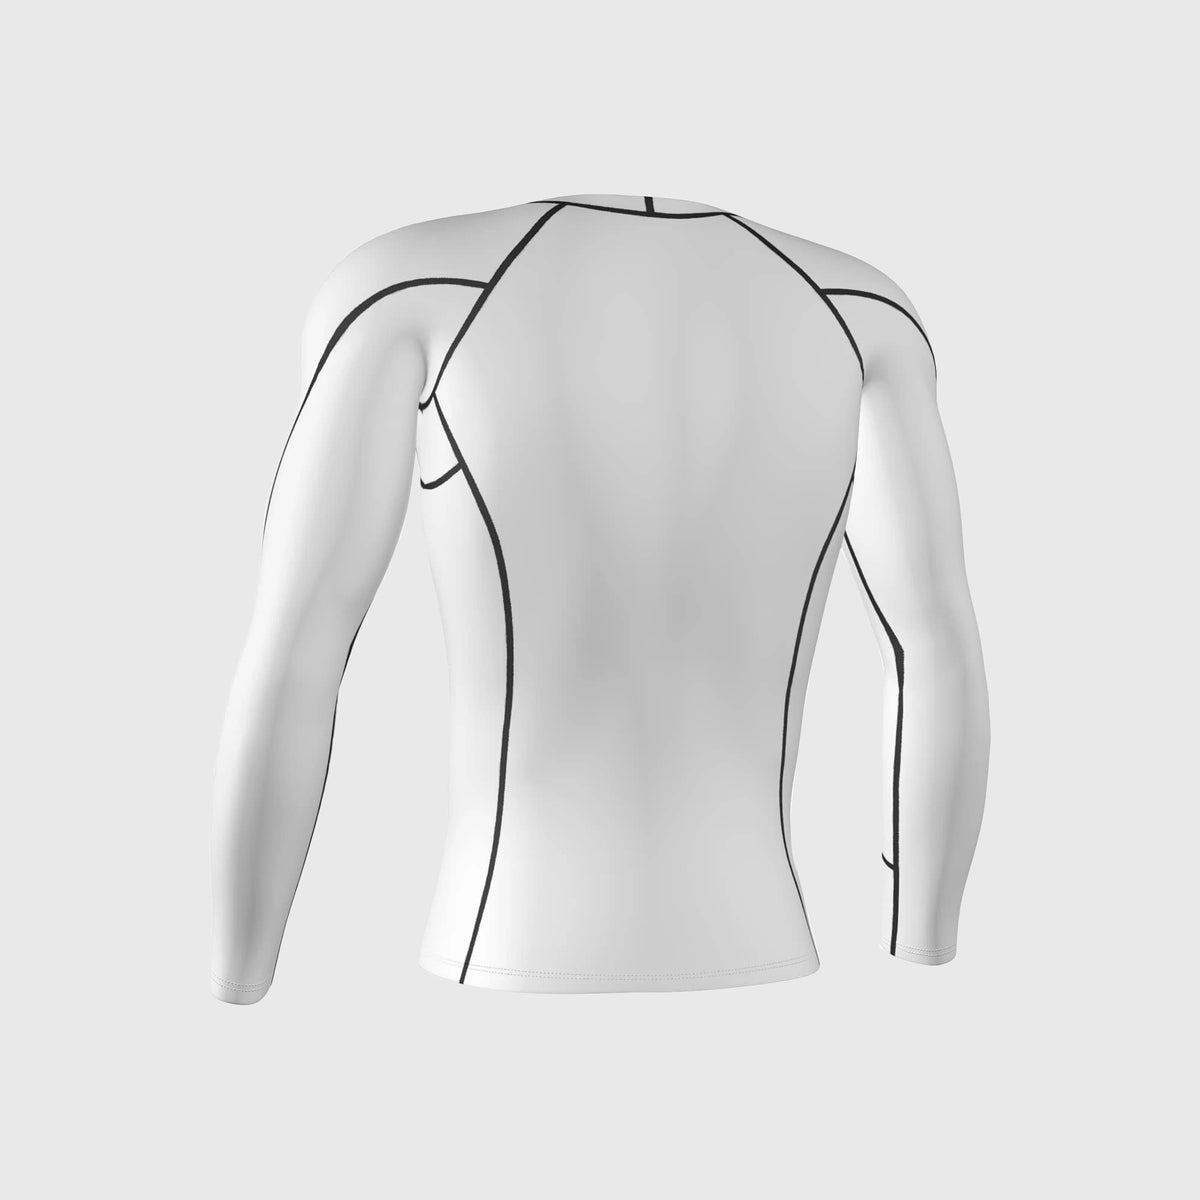 Fdx Cosmic White Men's & Boy's Compression Thermal Winter Base Layer Shirt